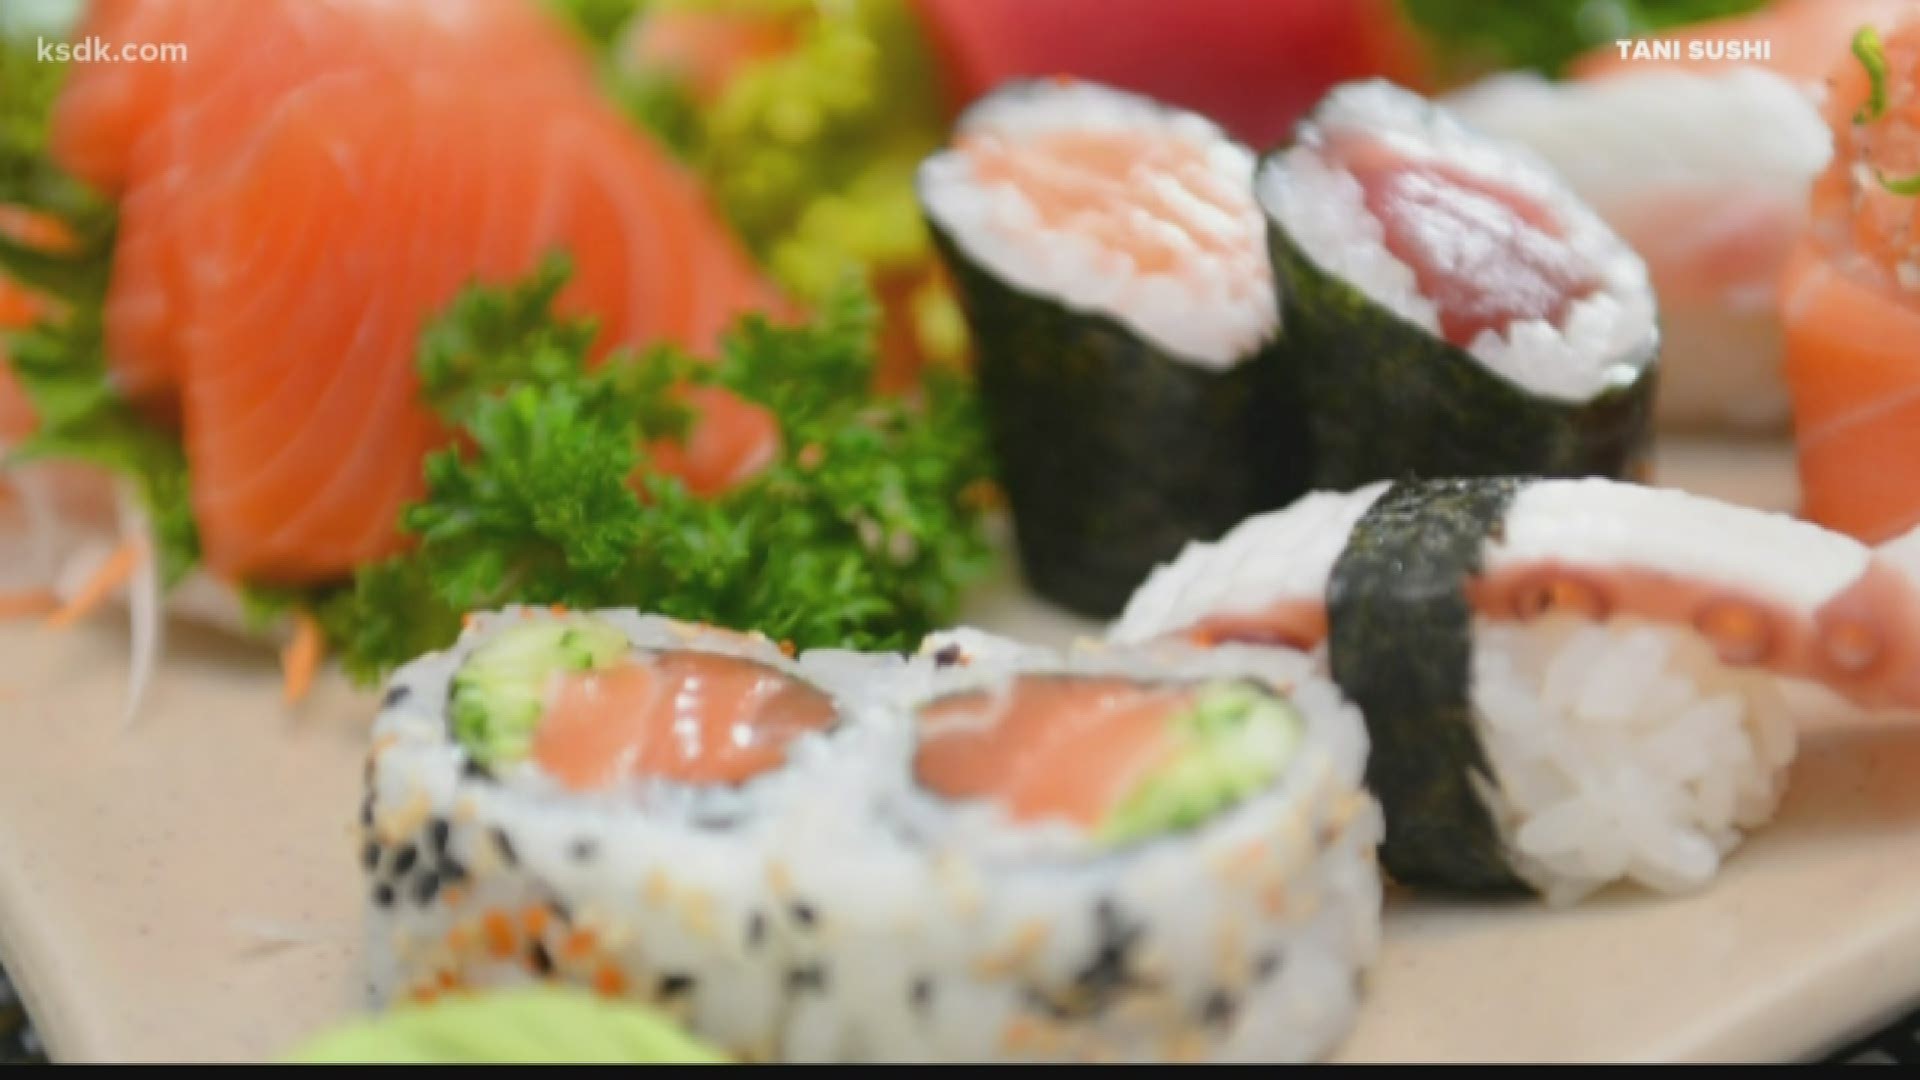 The popular sushi spot closed its doors on Feb. 29